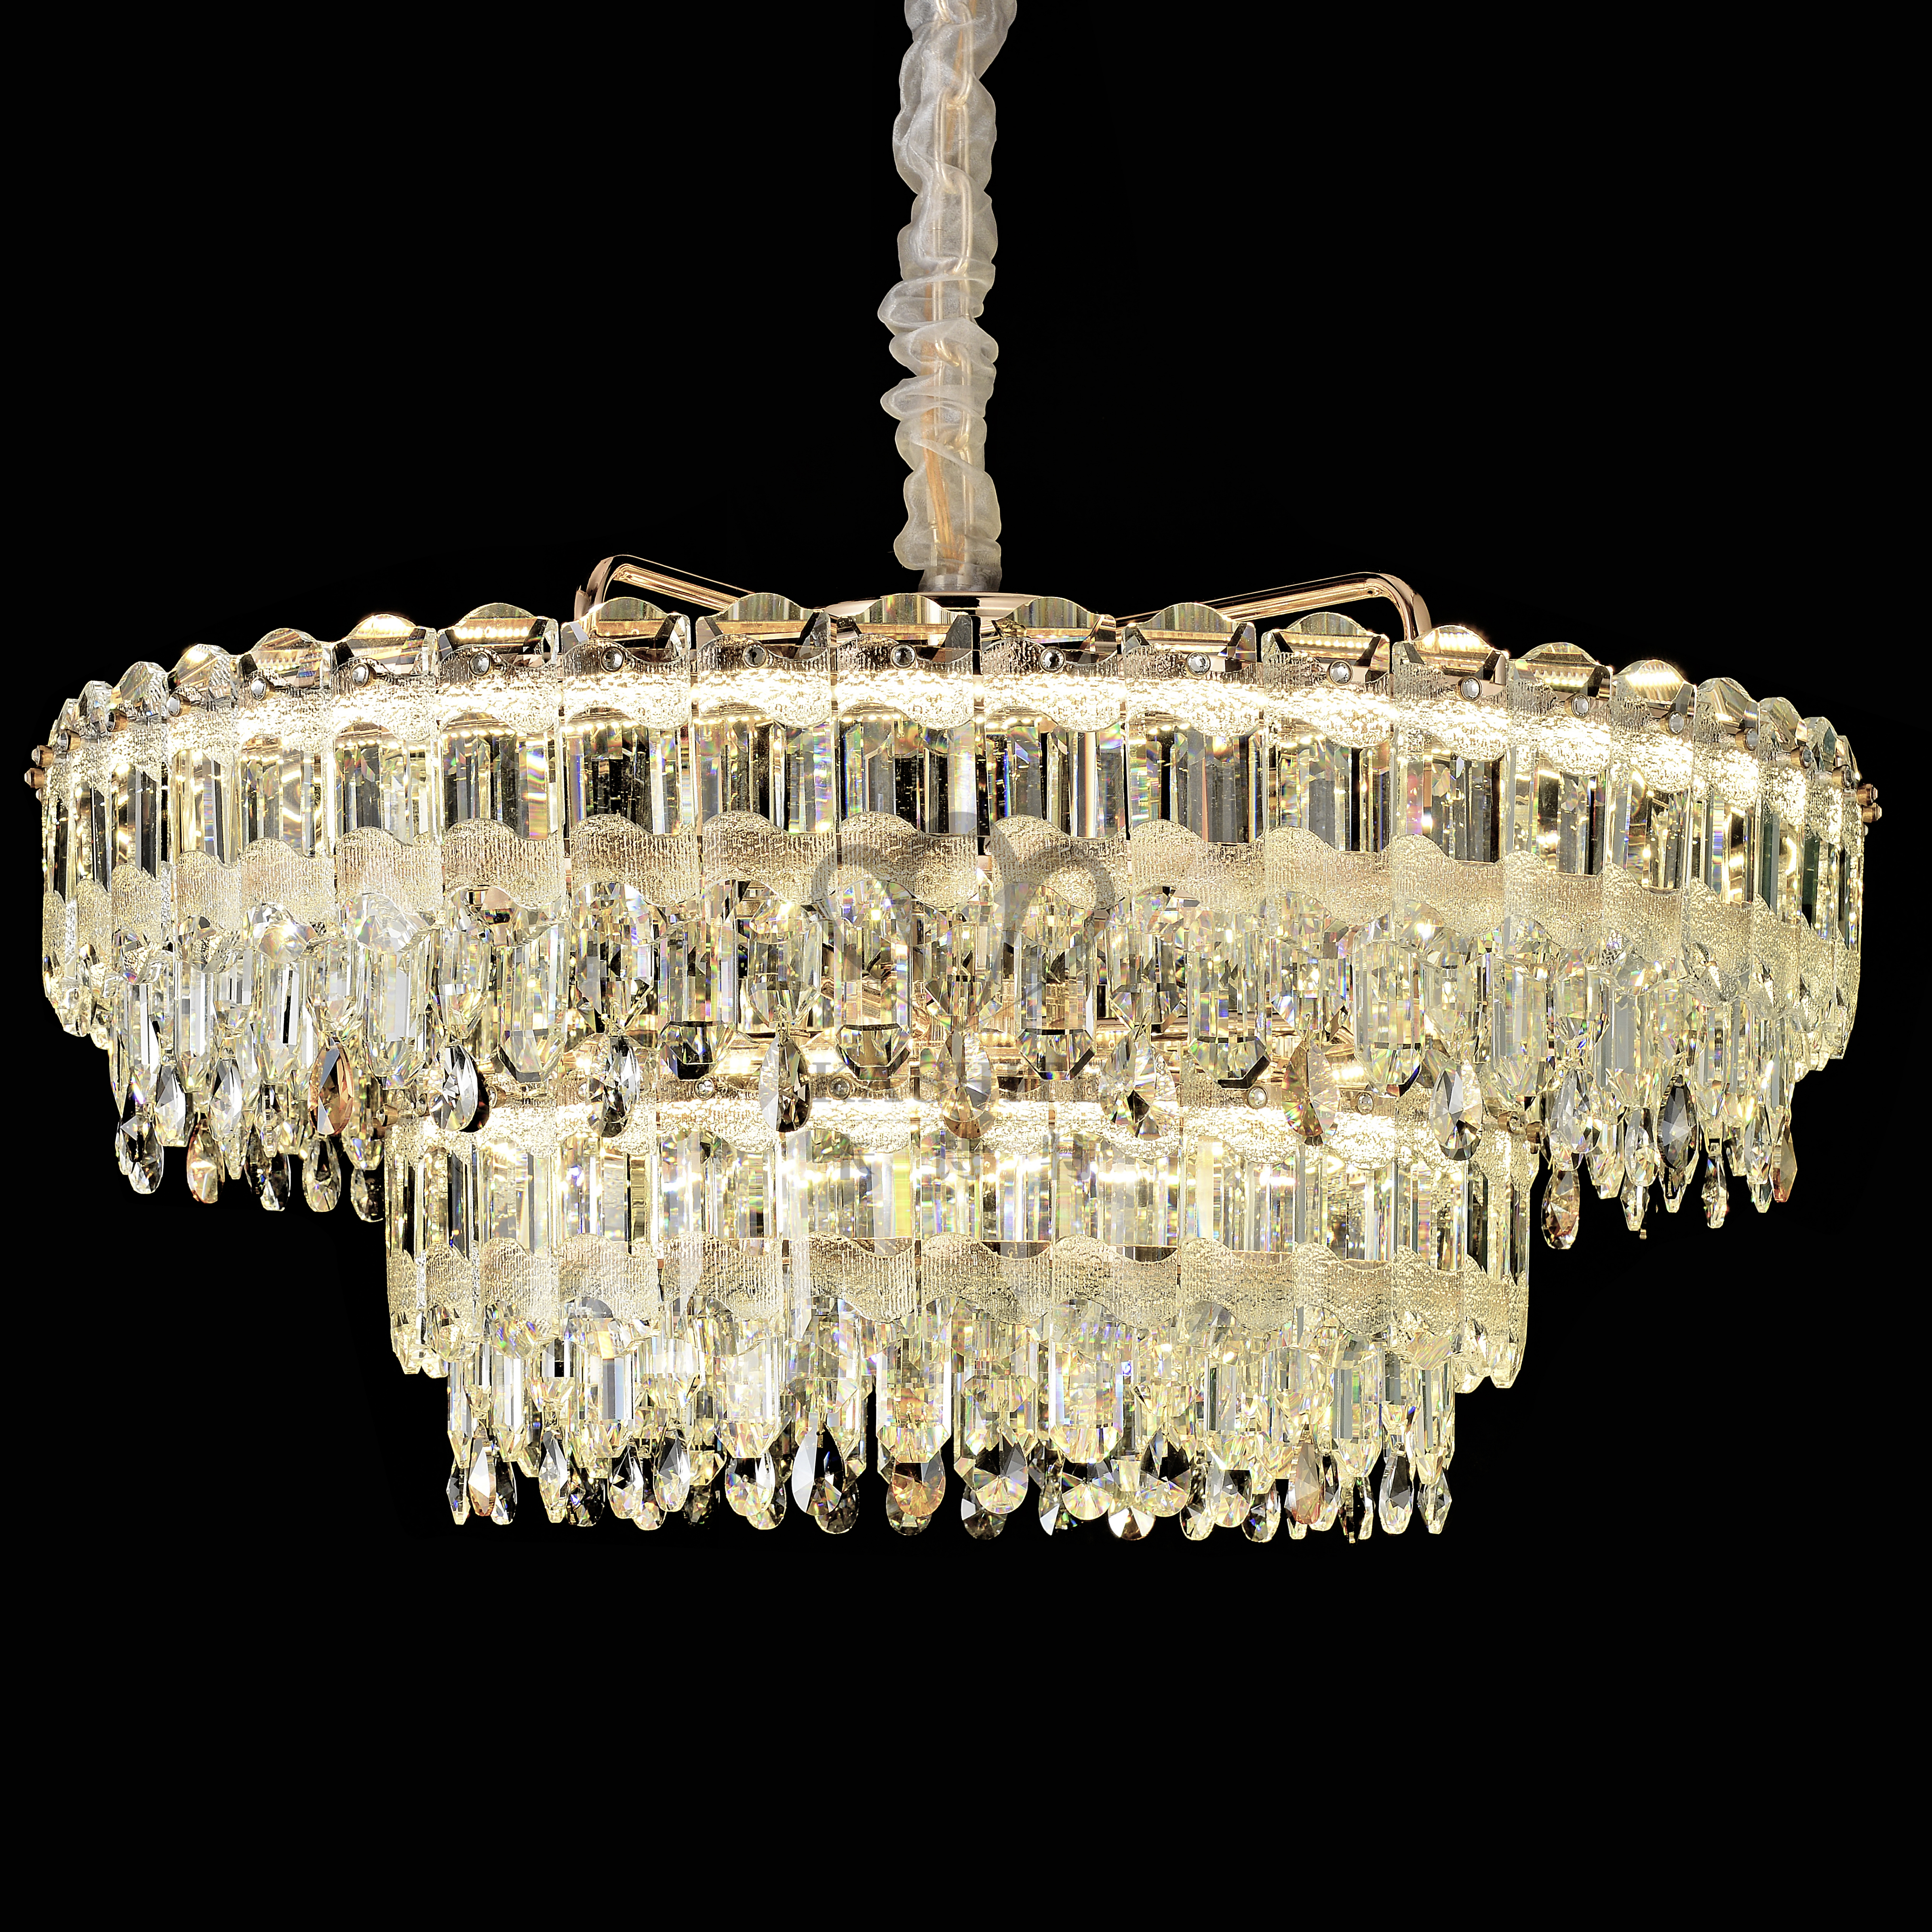 Kashite New design modern crystal chandelier